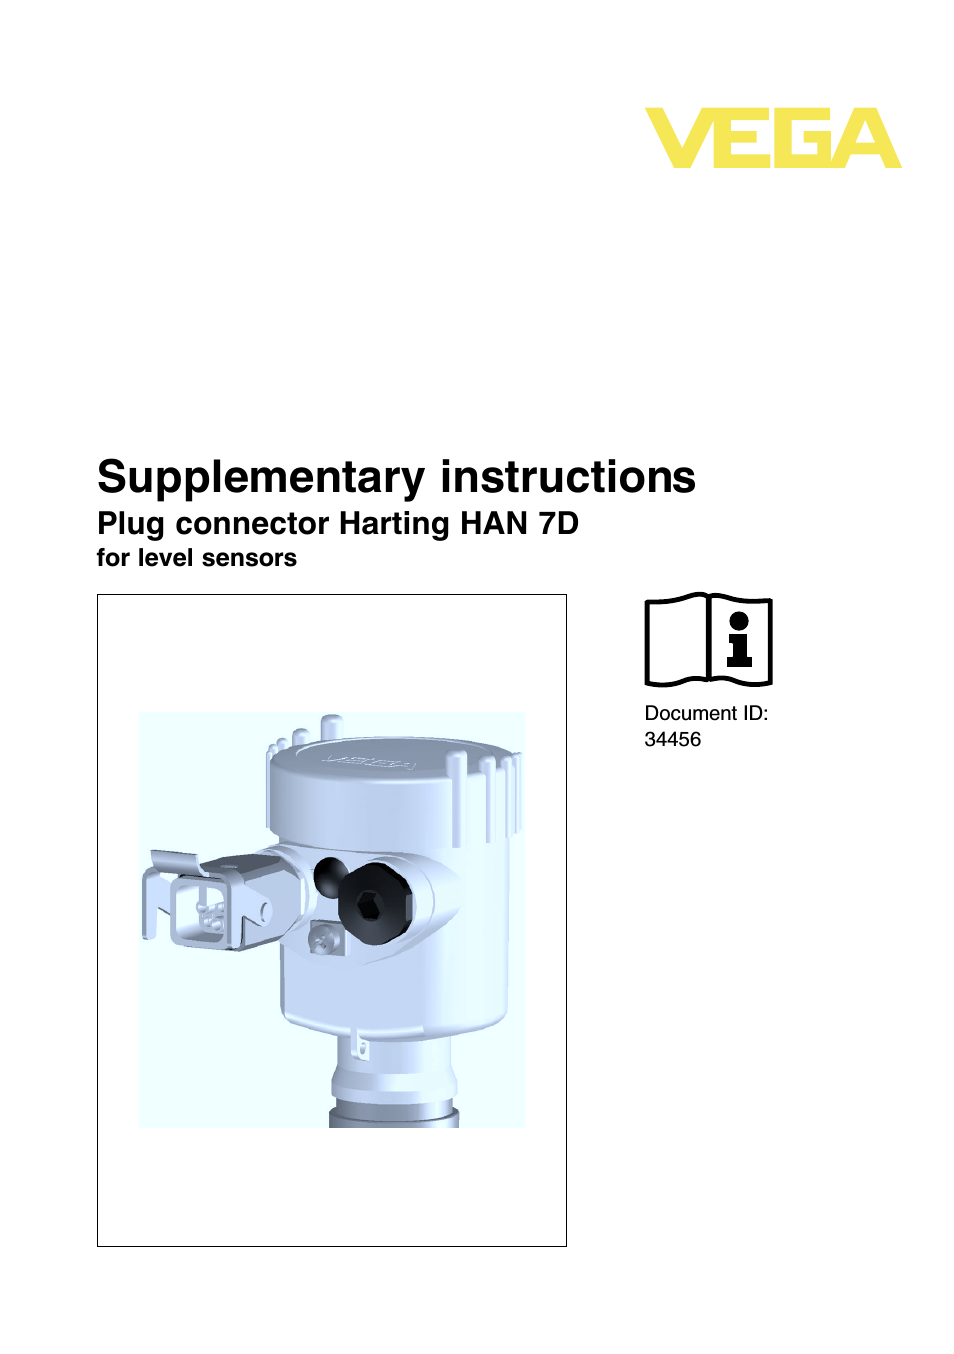 Plug connector Harting HAN 7D for level sensors